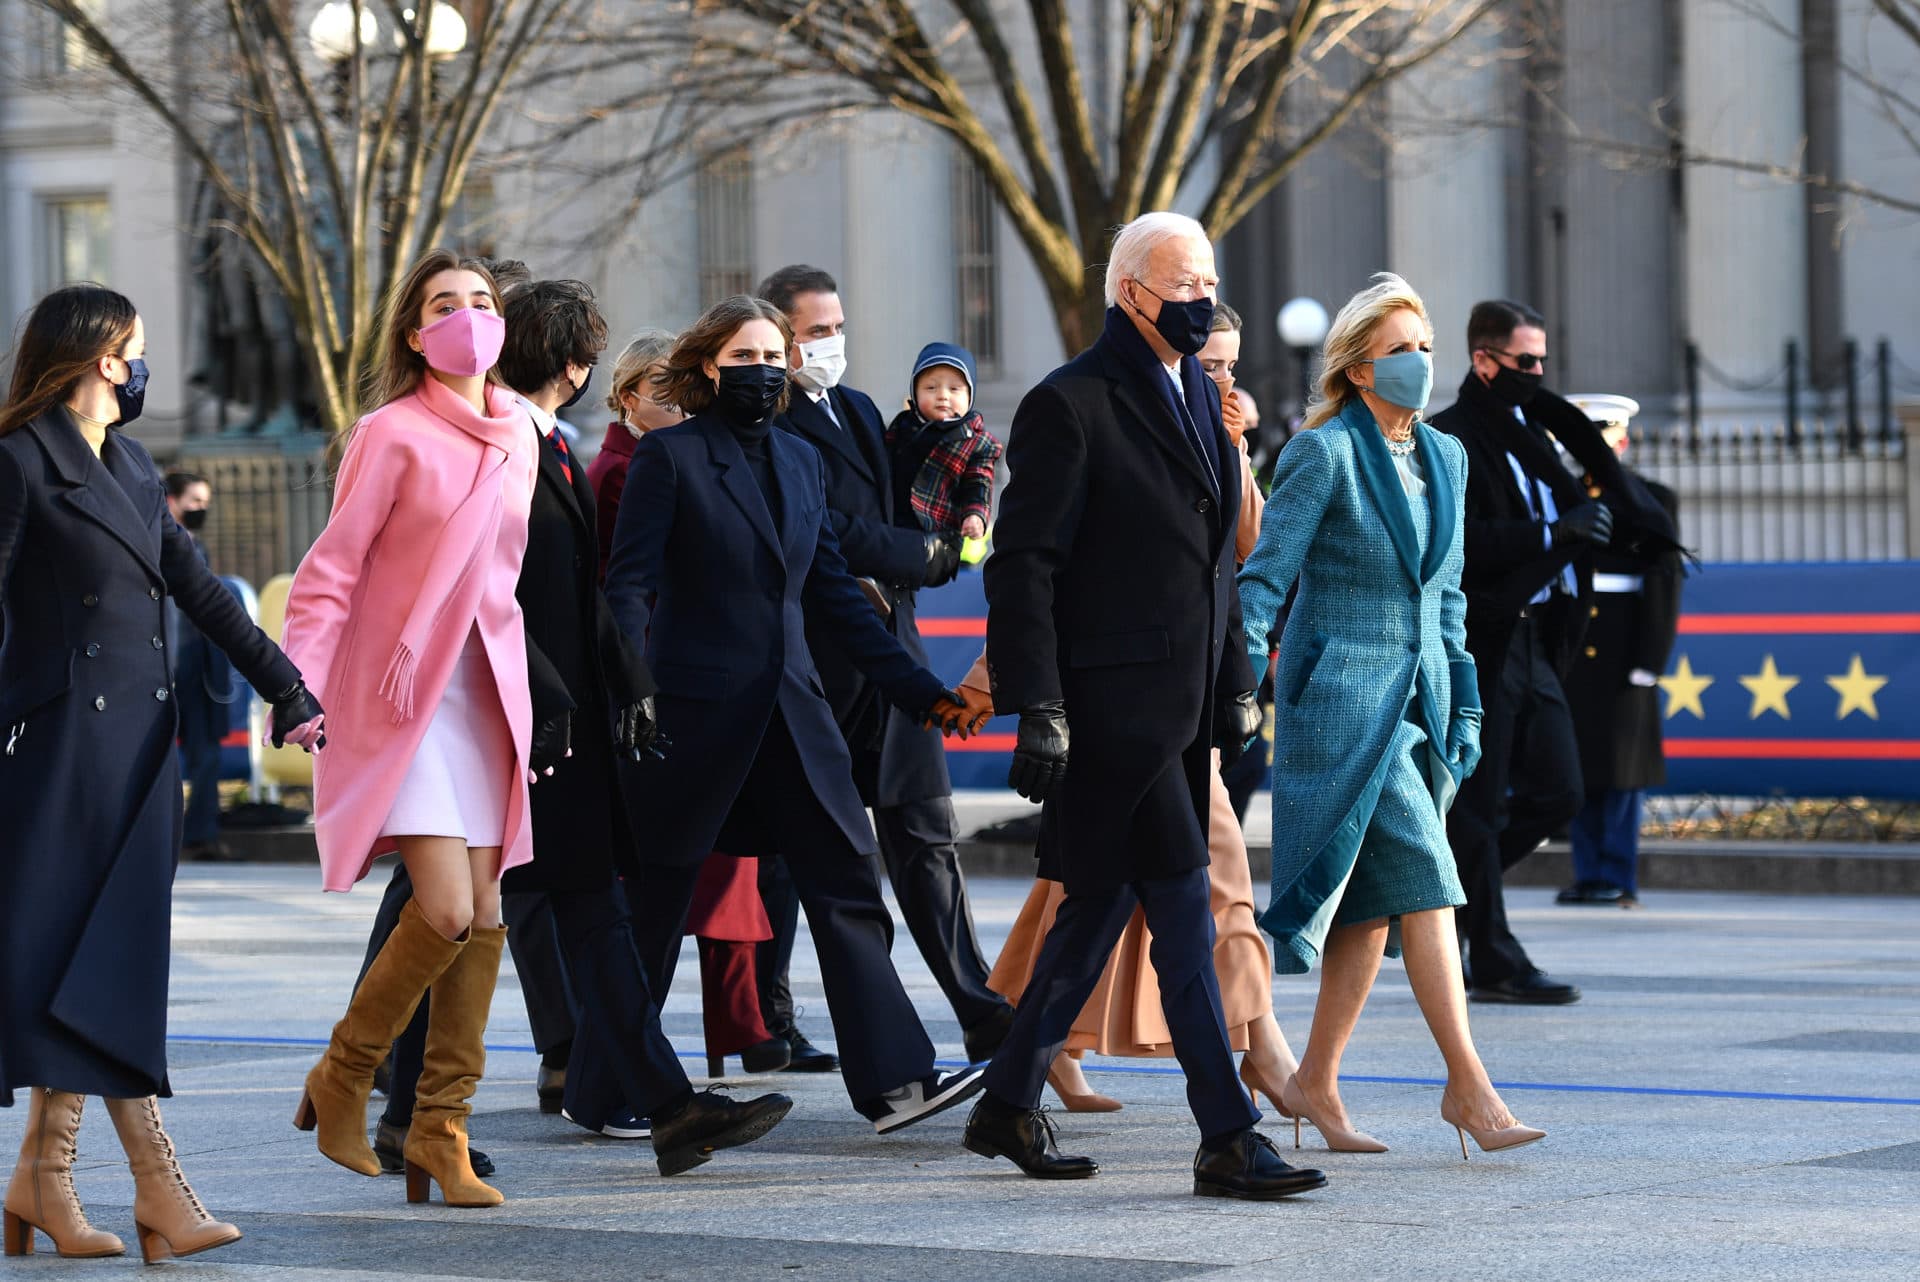 PHOTOS: The Inauguration Of Joe Biden And Kamala Harris ...